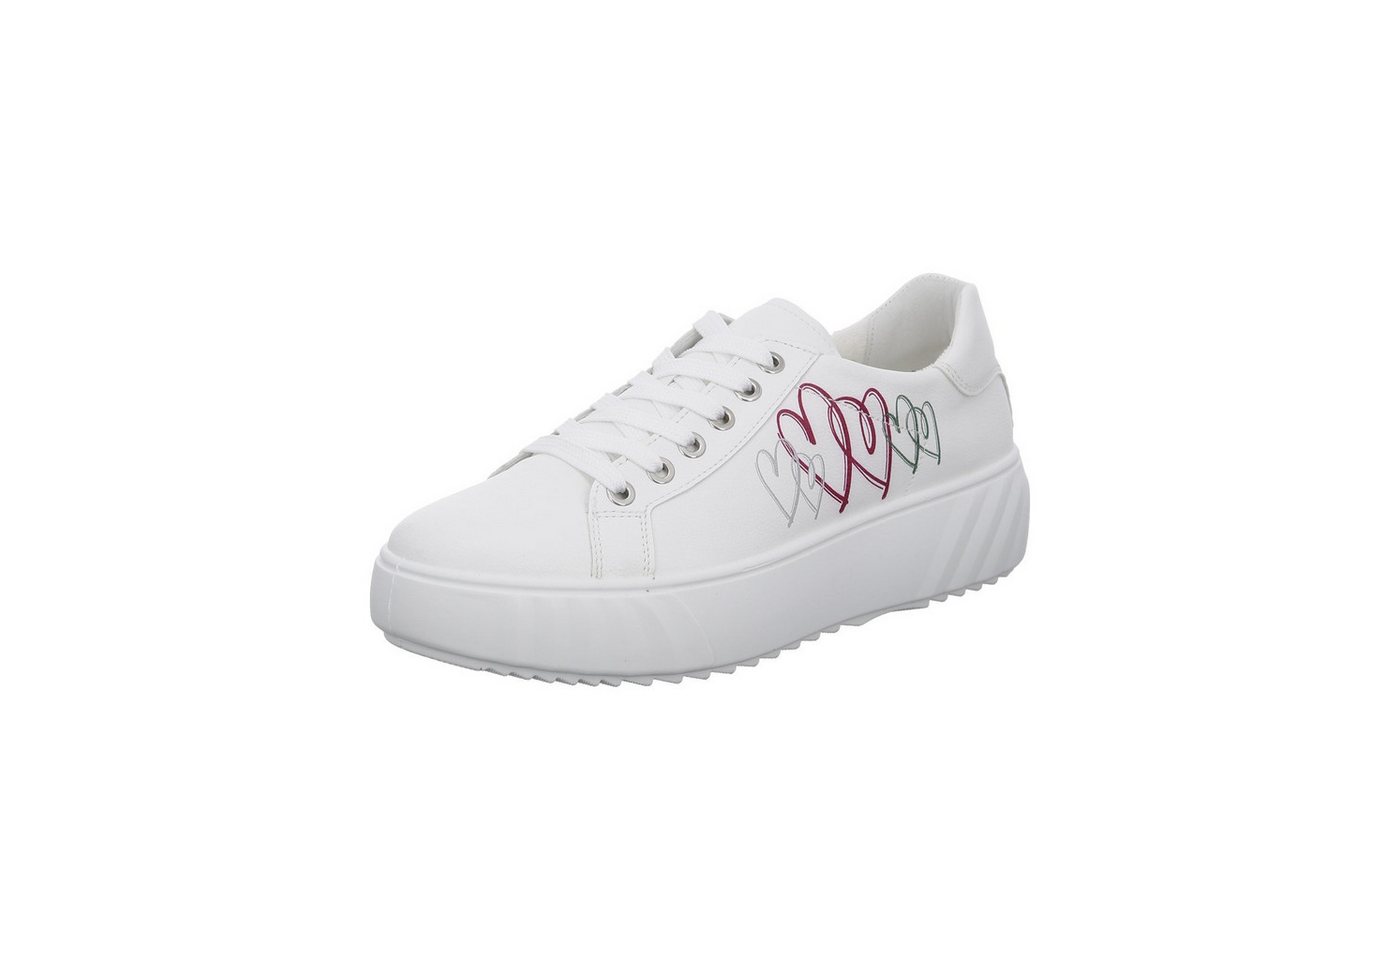 Ara Monaco - Damen Schuhe Sneaker Schnürer Synthetik weiß von Ara